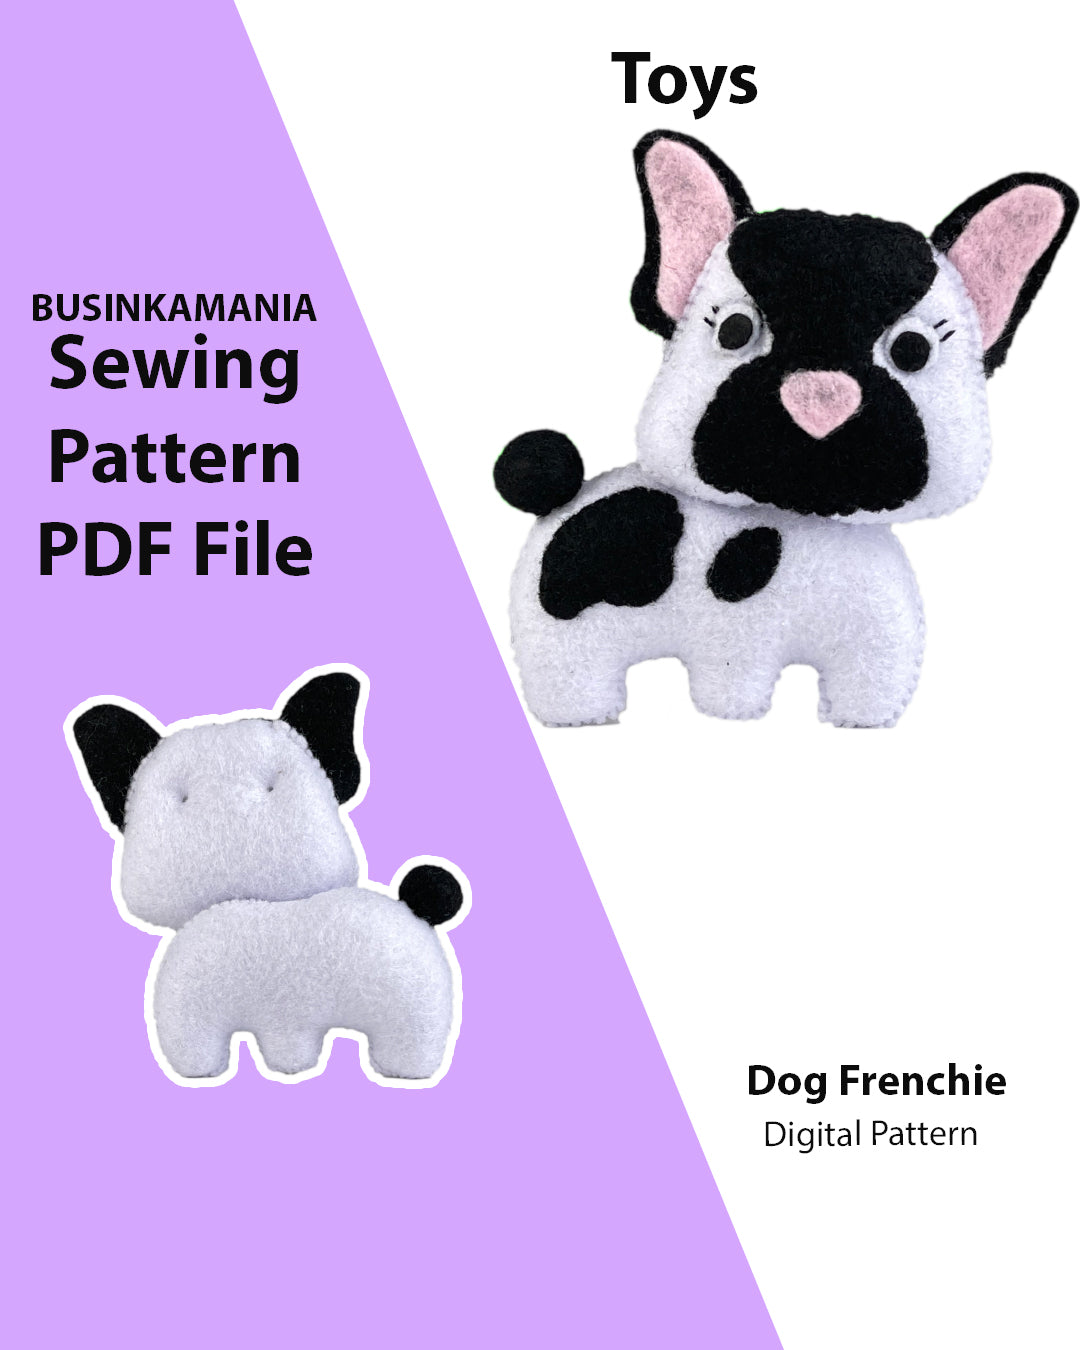 Dog Frenchie Felt Toy Sewing Pattern